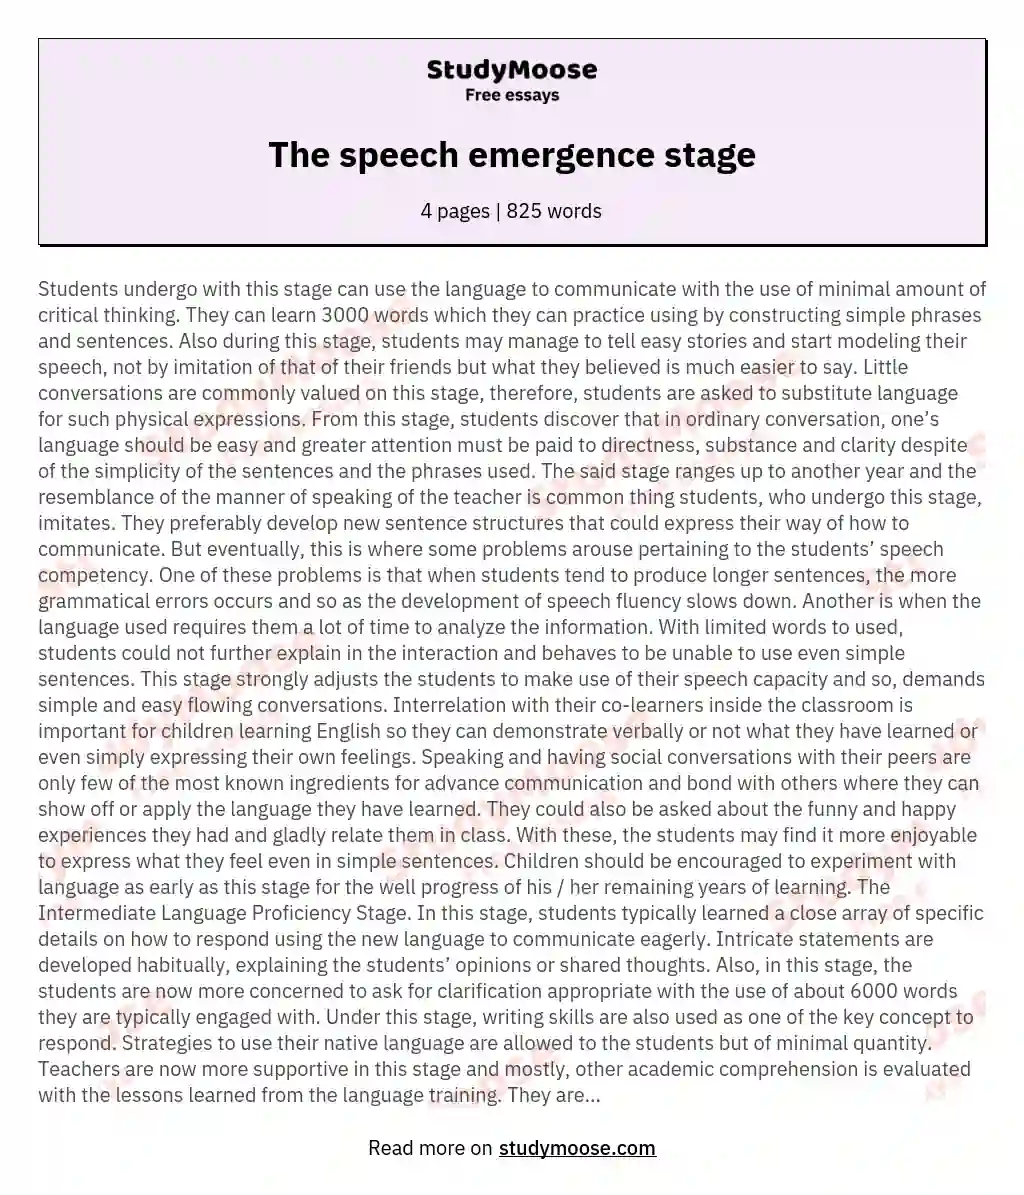 The speech emergence stage essay